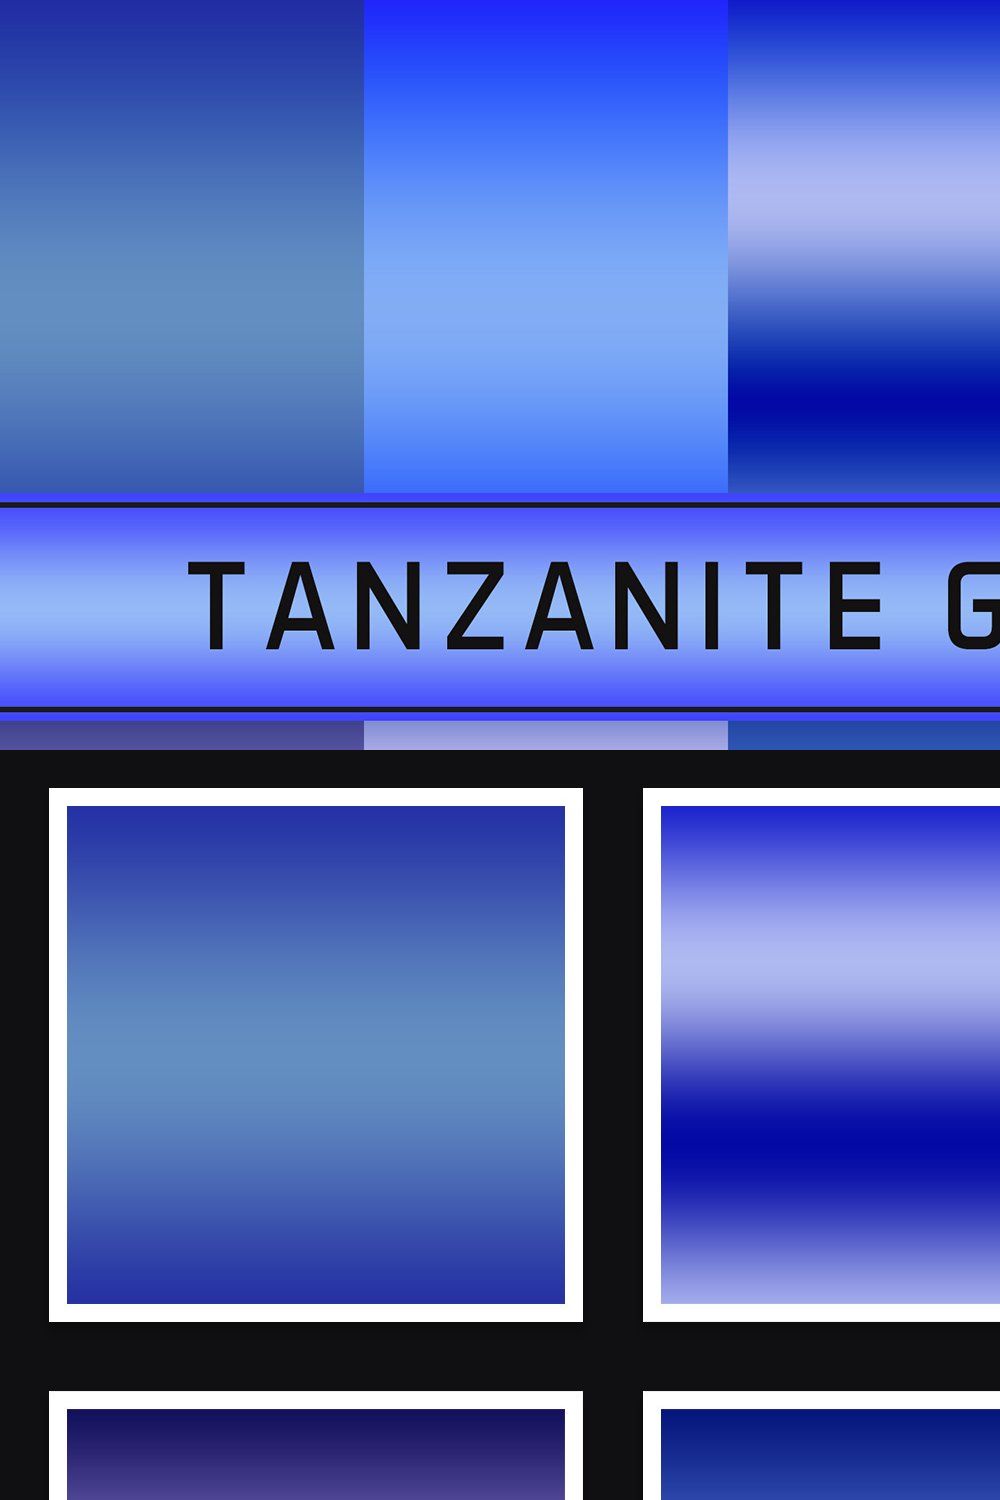 Tanzanite Gradients pinterest preview image.